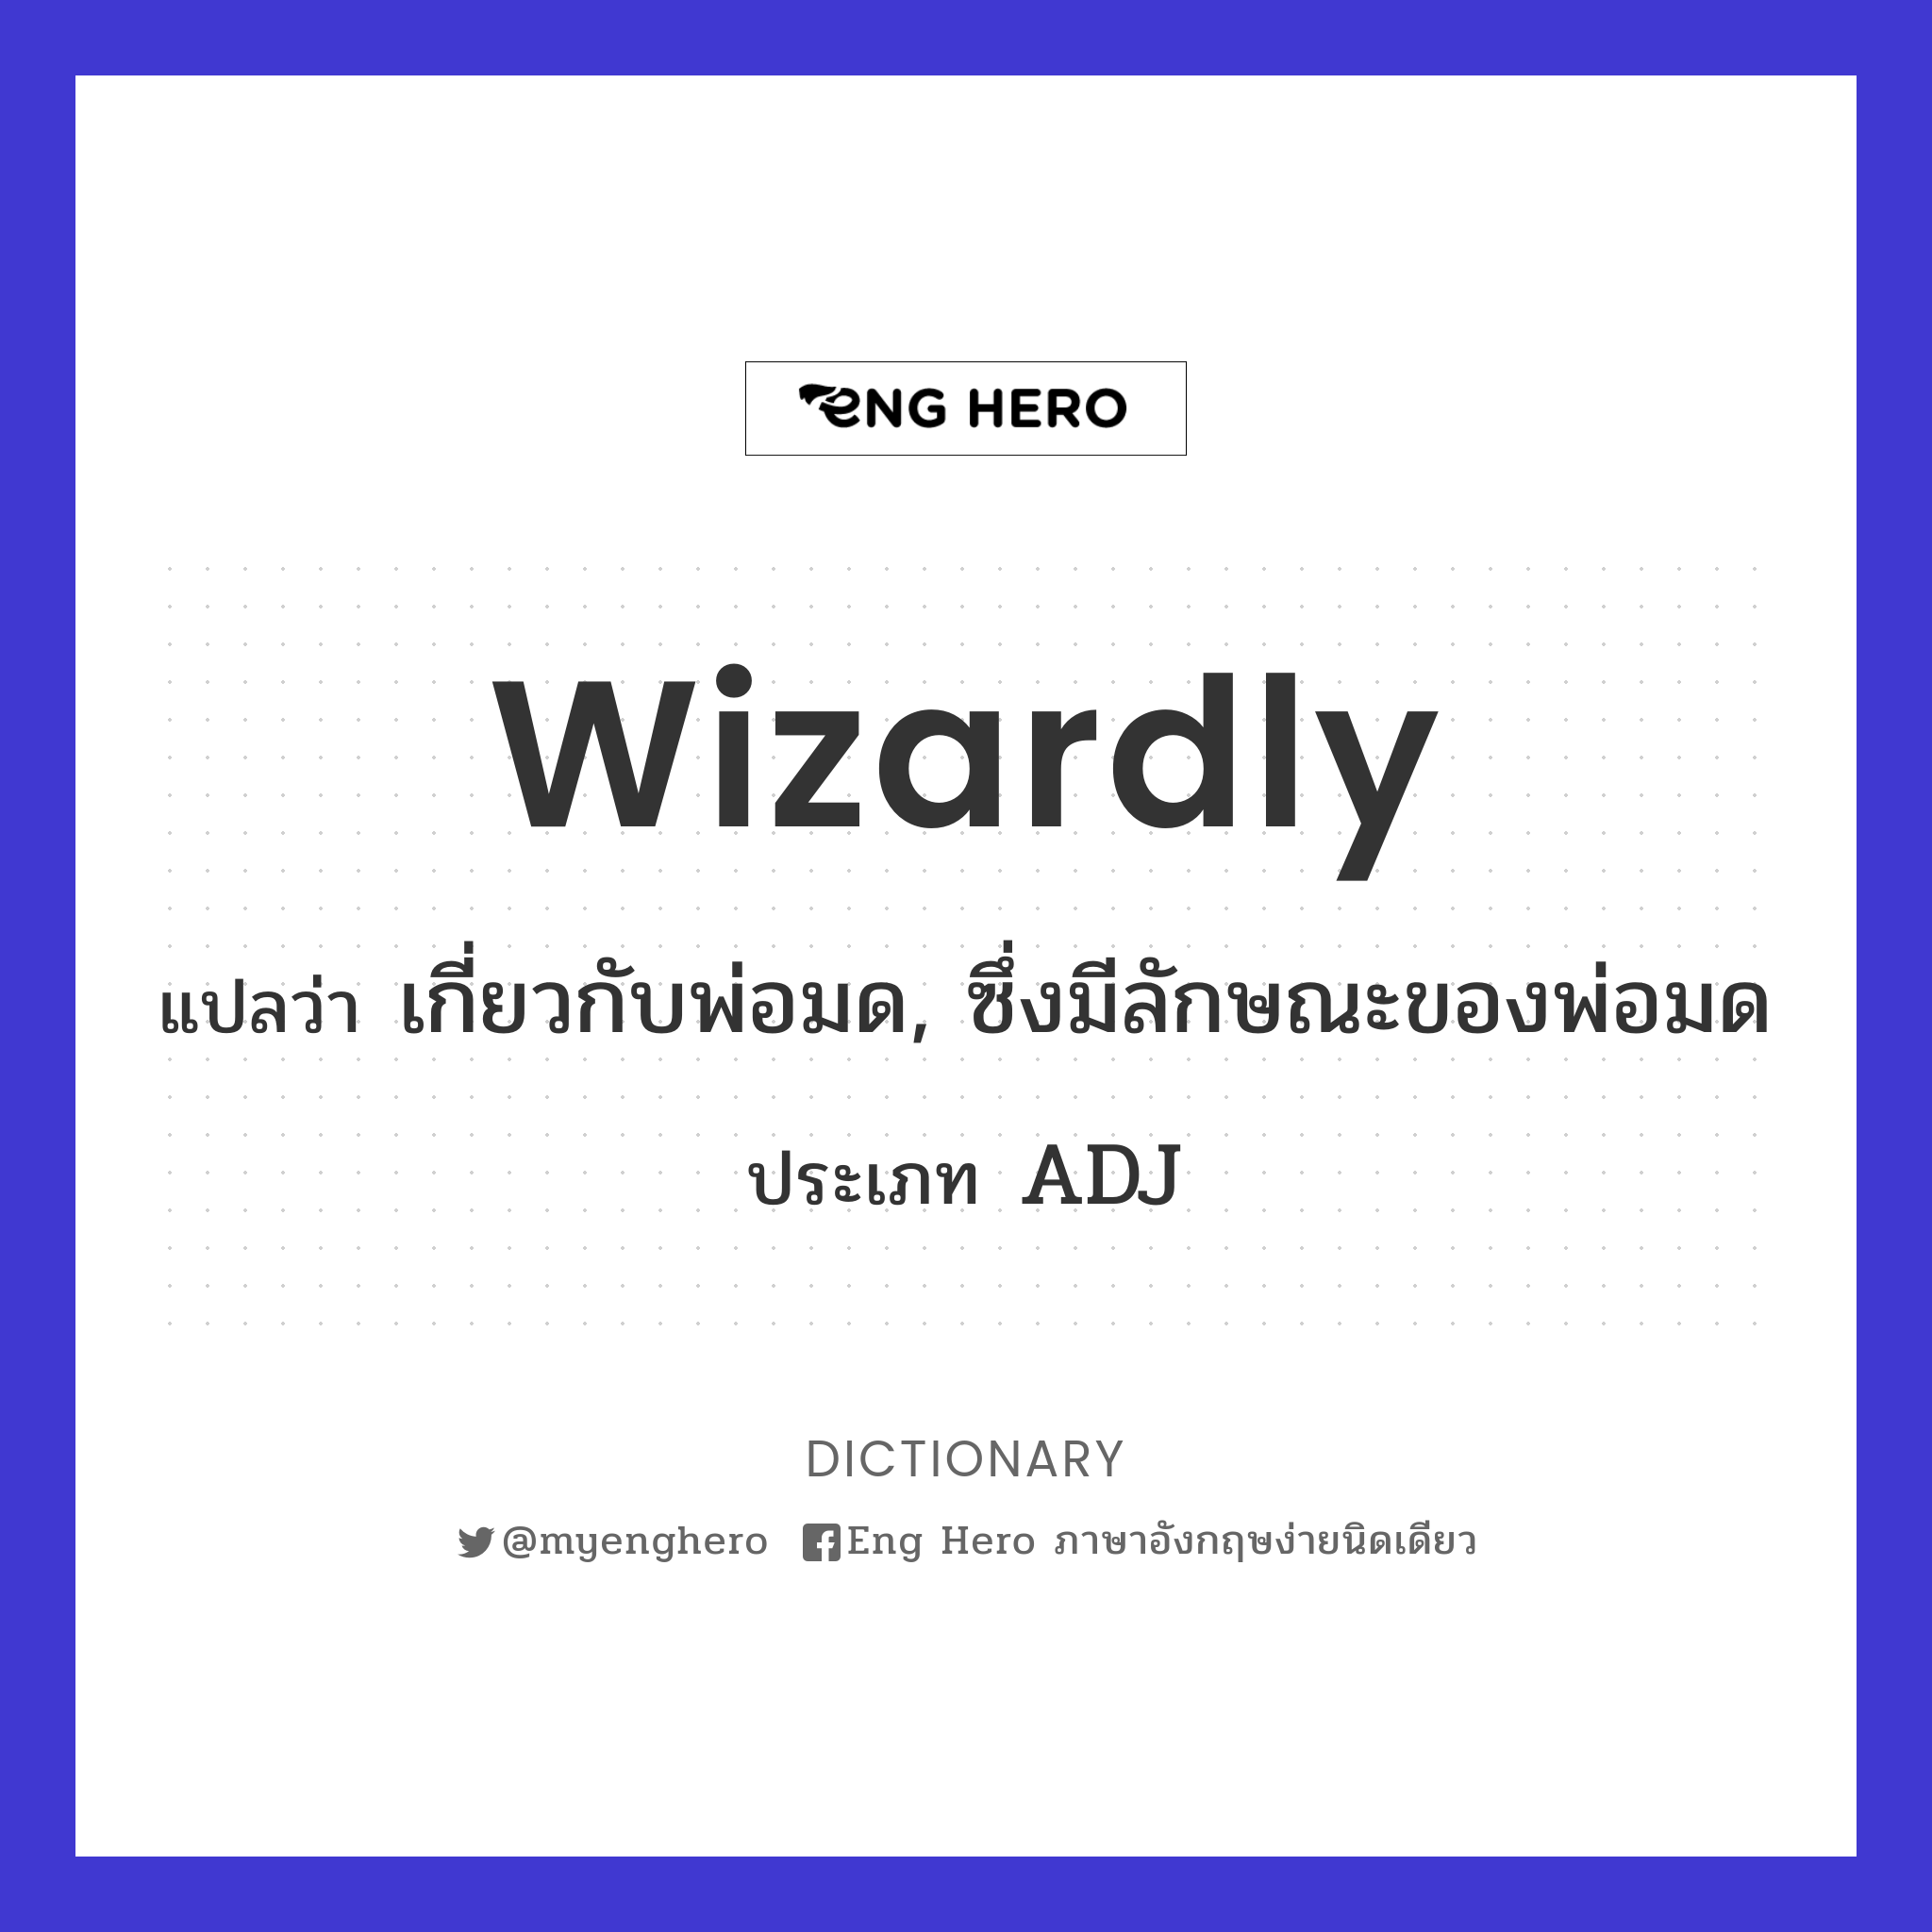 wizardly